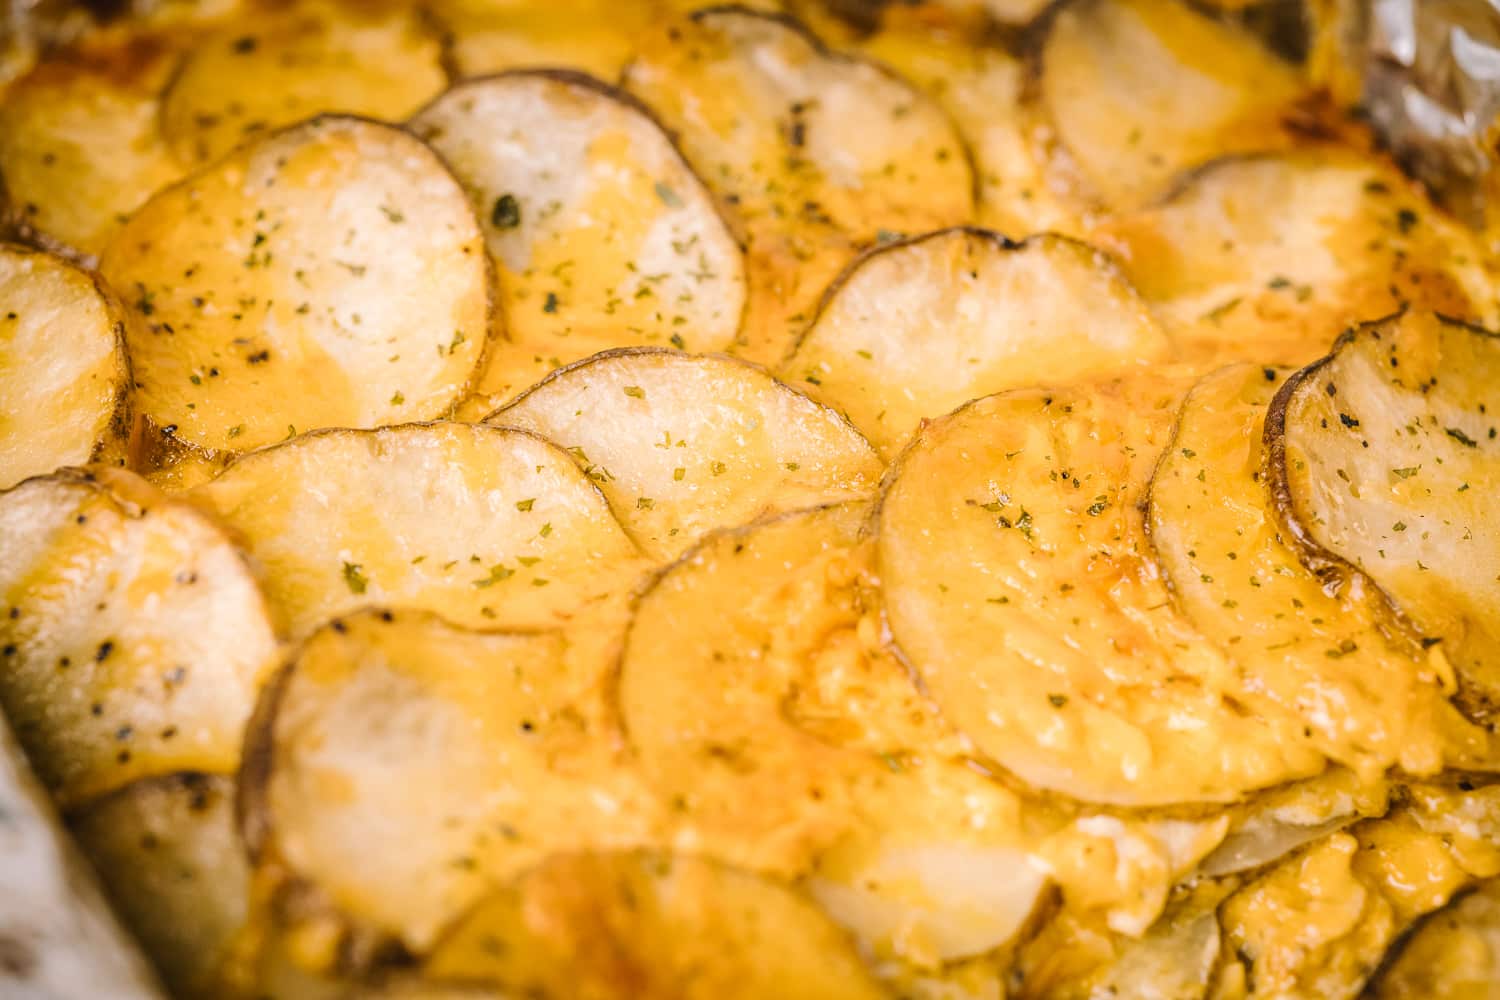 Smoked Chantilly potatoes in a baking dish.